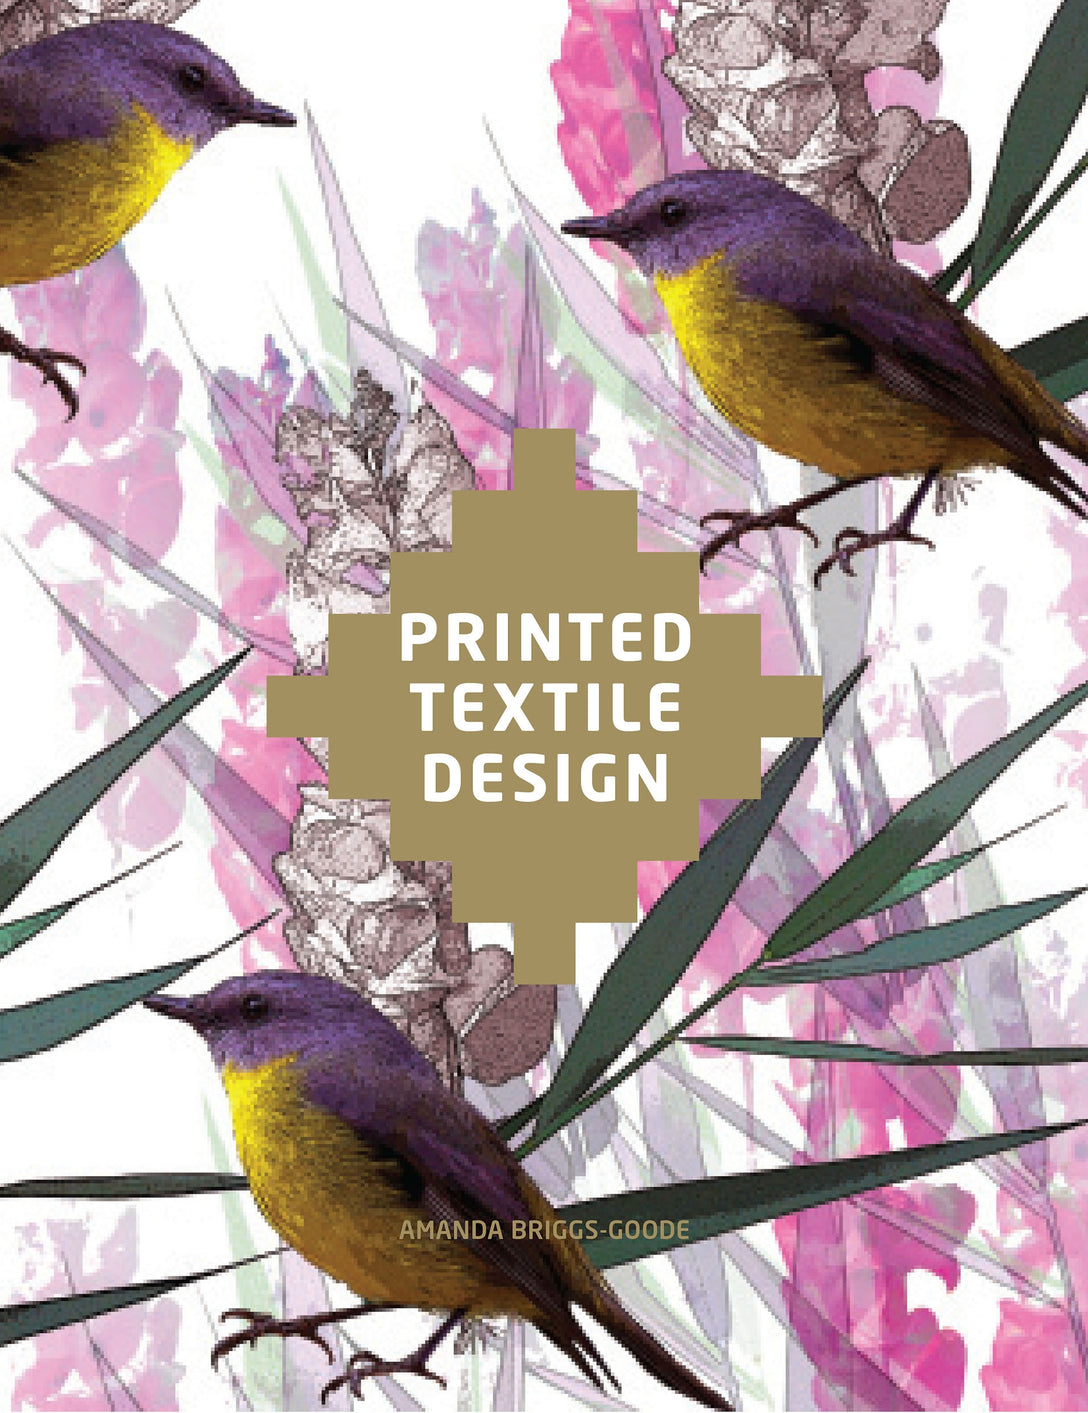 Printed Textile Design by Amanda Briggs-Goode